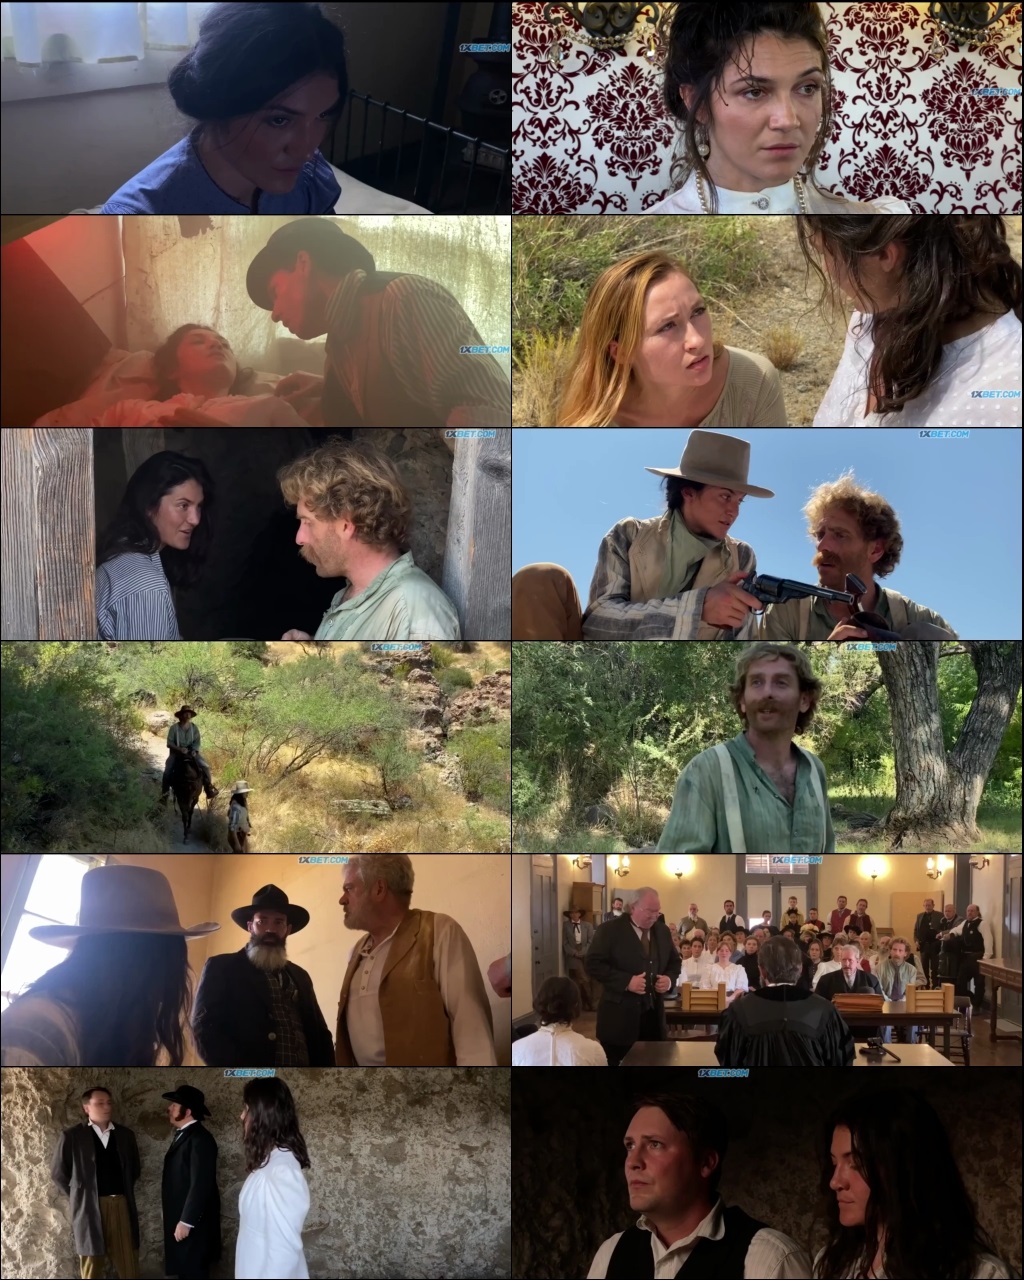 The.Woman.Who.Robbed.the.Stagecoach.2021.720p.AMZN.WEBRip.TEL.DUB.1XBET bolly4u movies